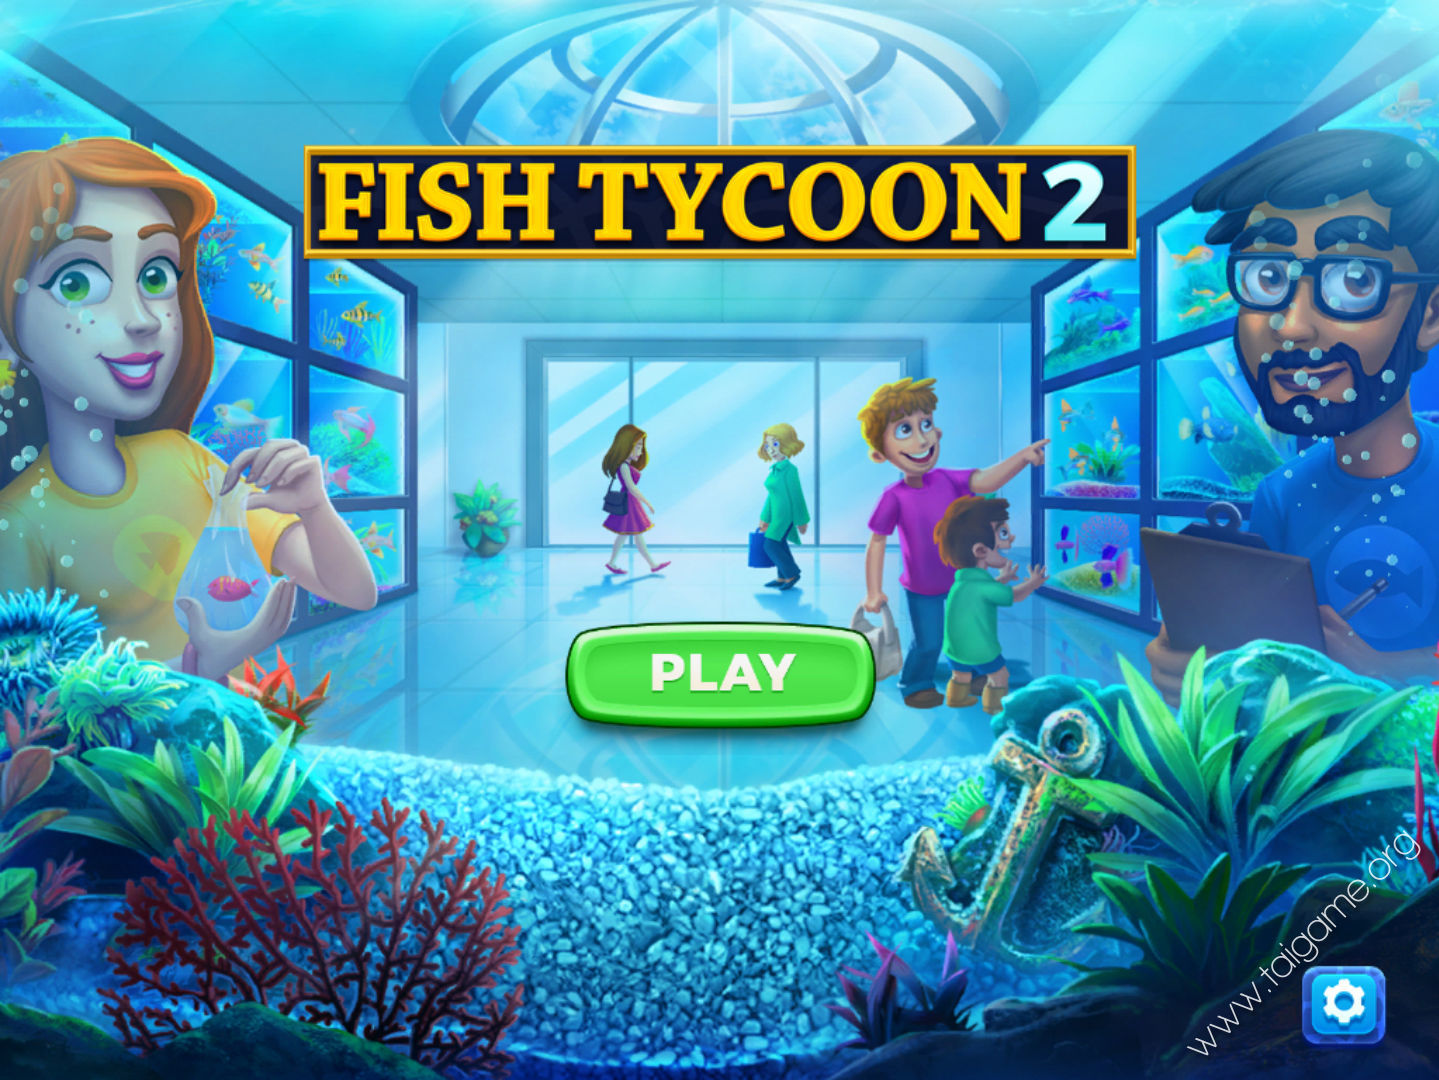 Fish tycoon 4